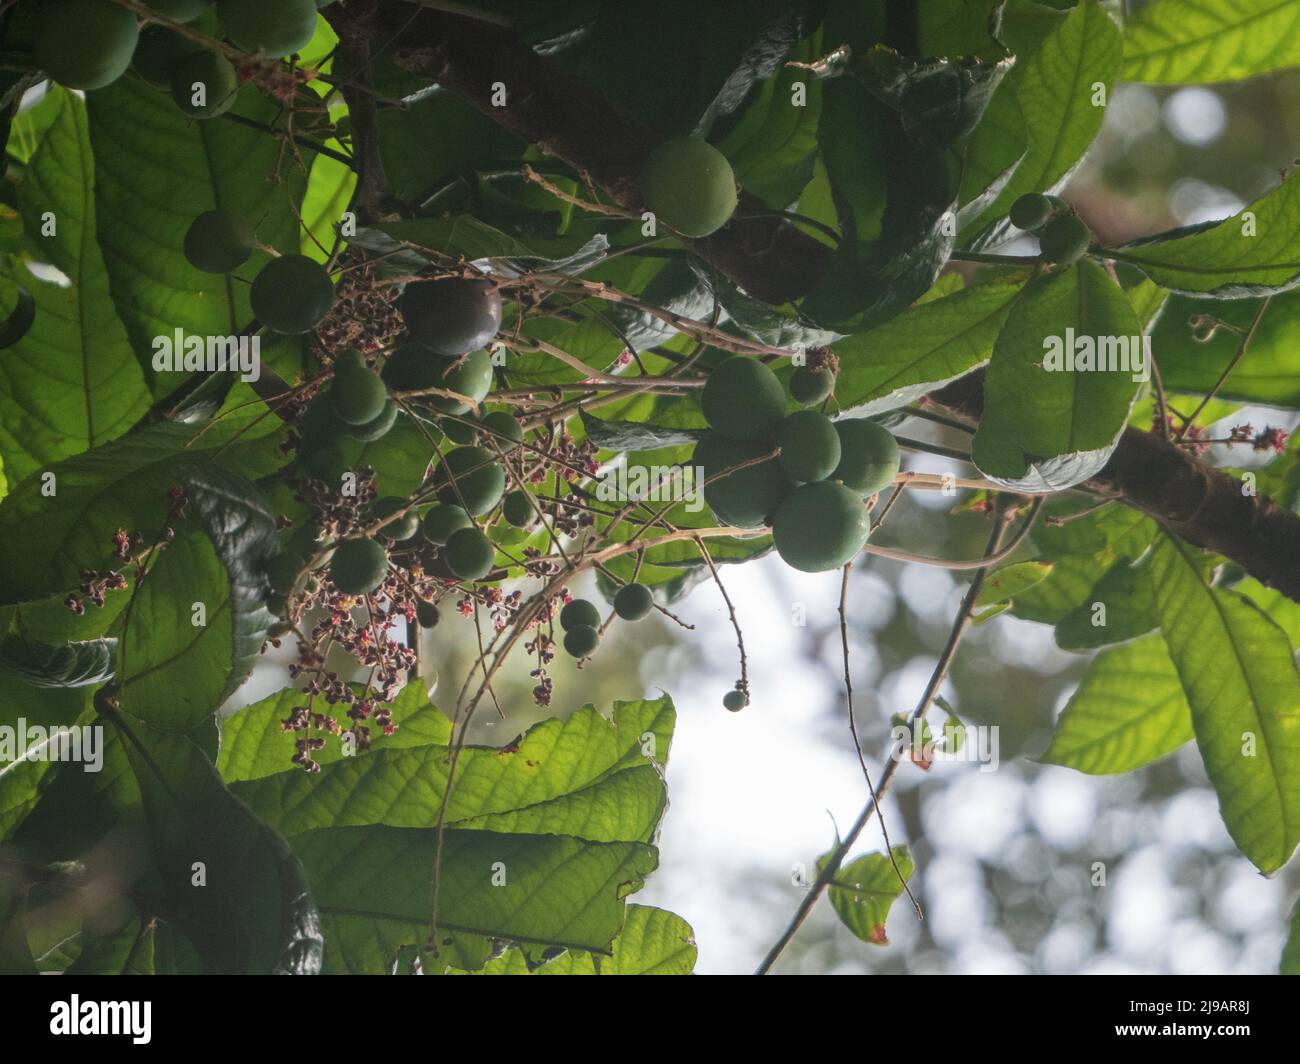 Davidson's Plum tree with unripe still green fruit and green leaves, Australian Native plant Stock Photo